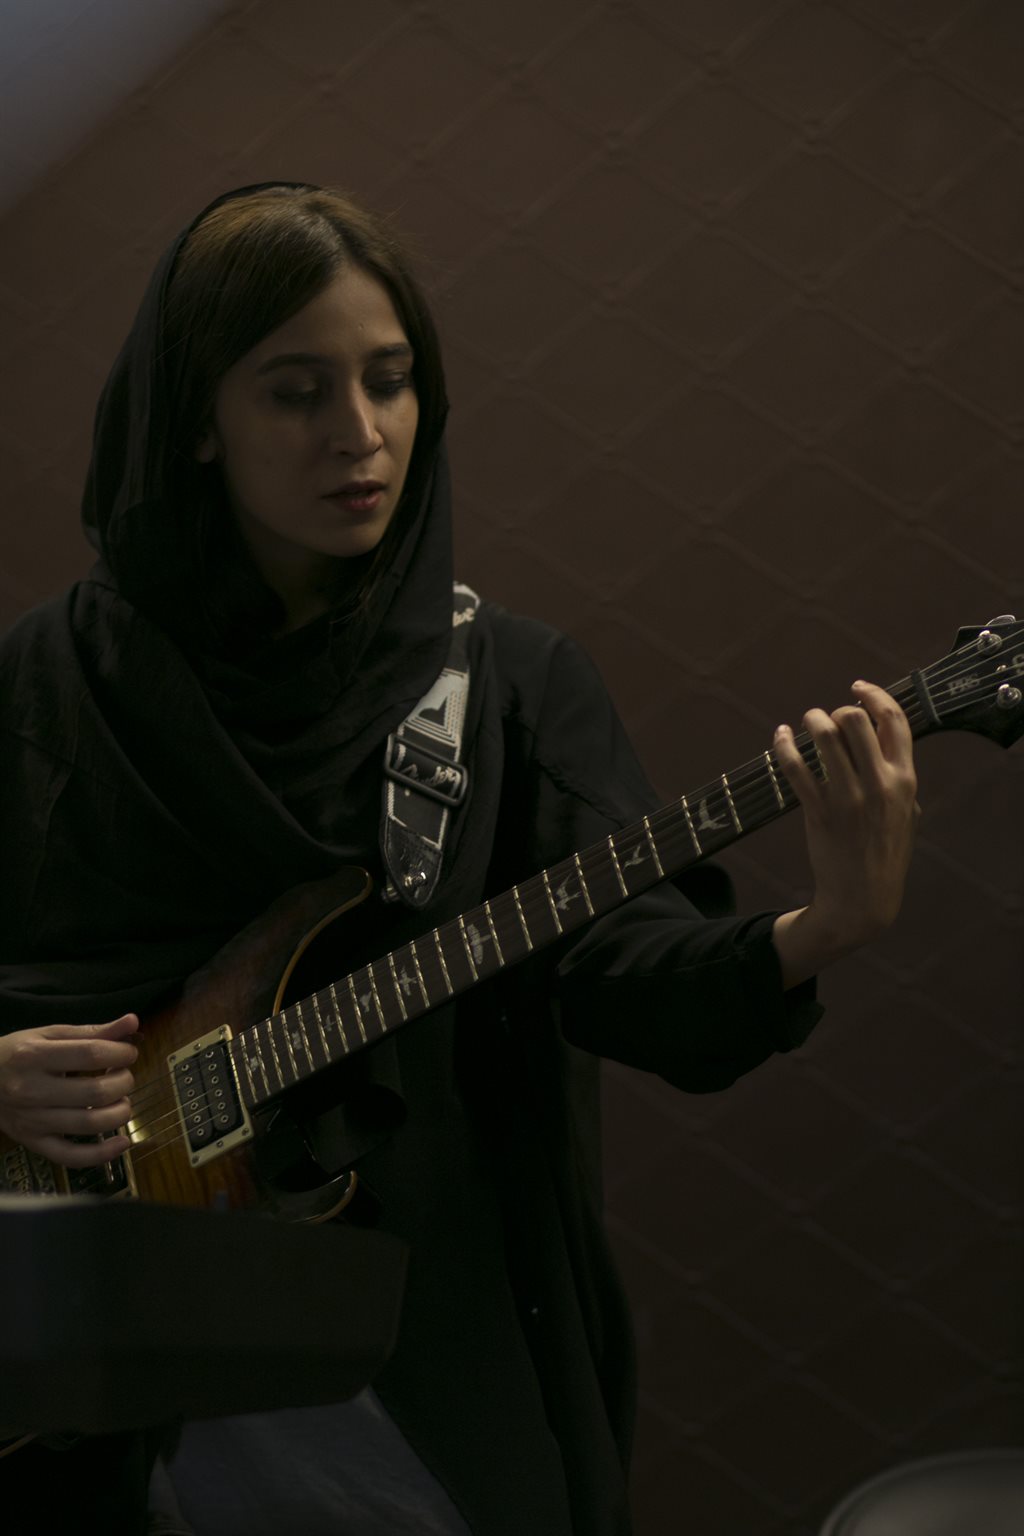 ATRAVAN - About iranian music scene and Batman